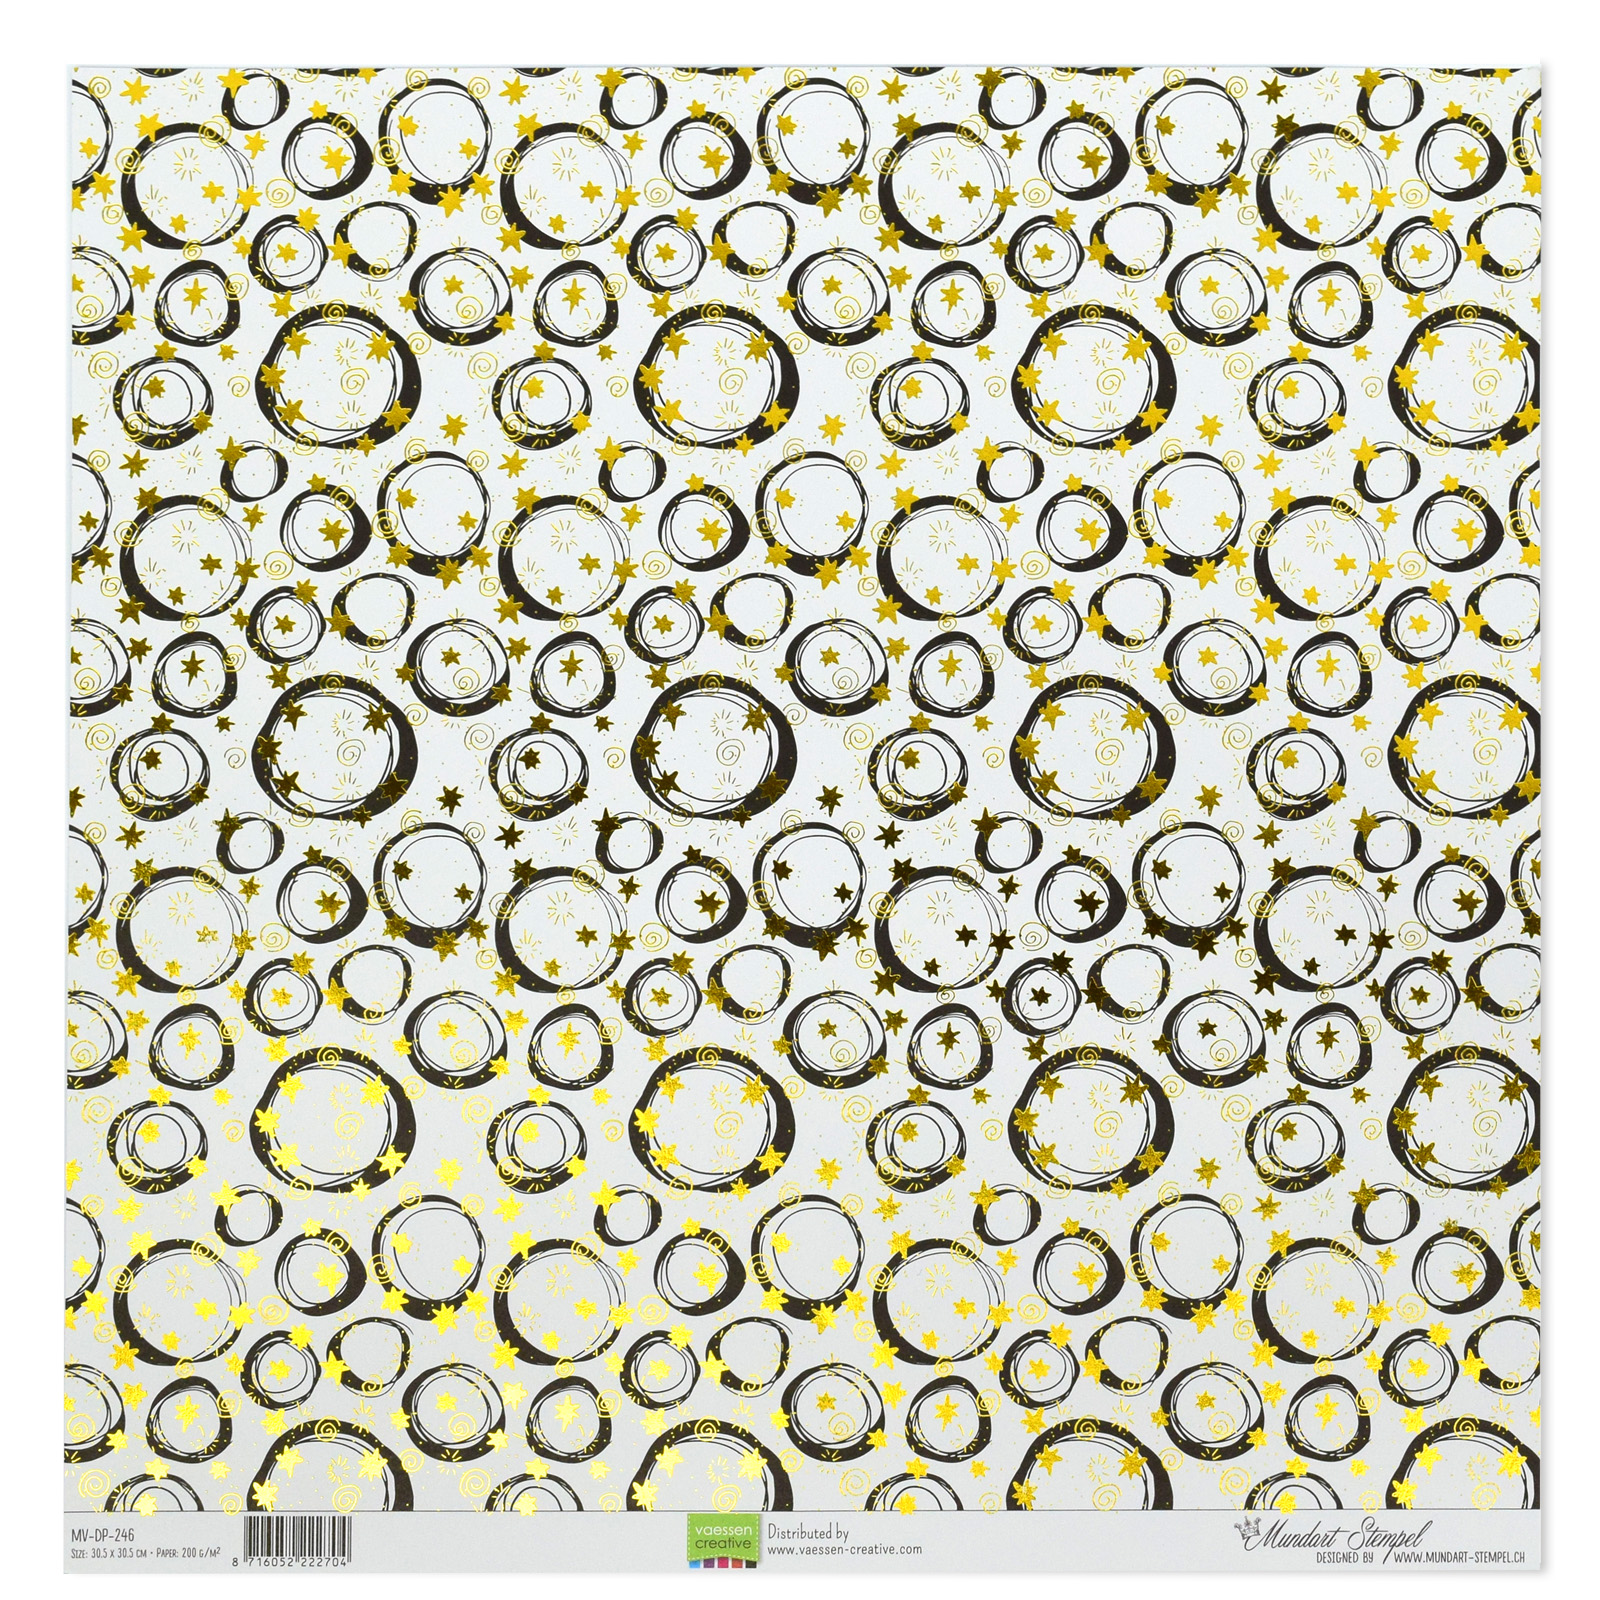 Mundart Stempel • Papel circles en dorado y negro